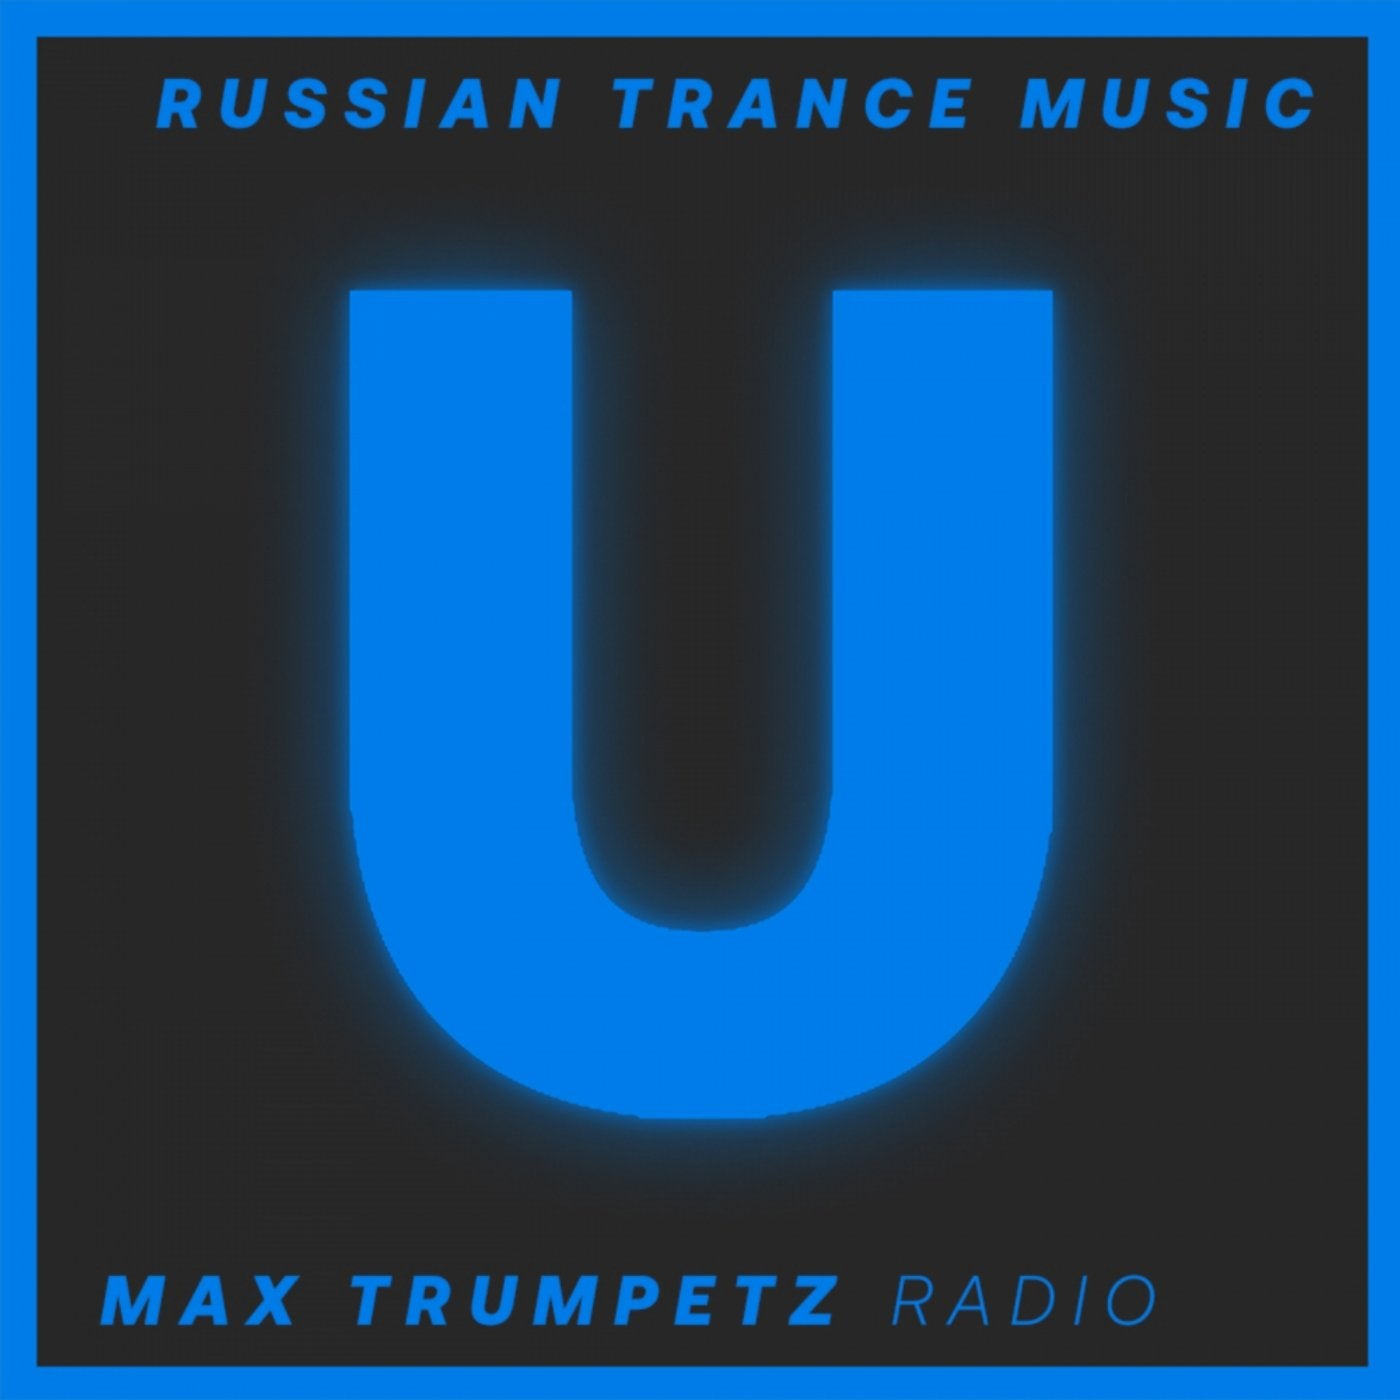 Russian Trance Music. Radio